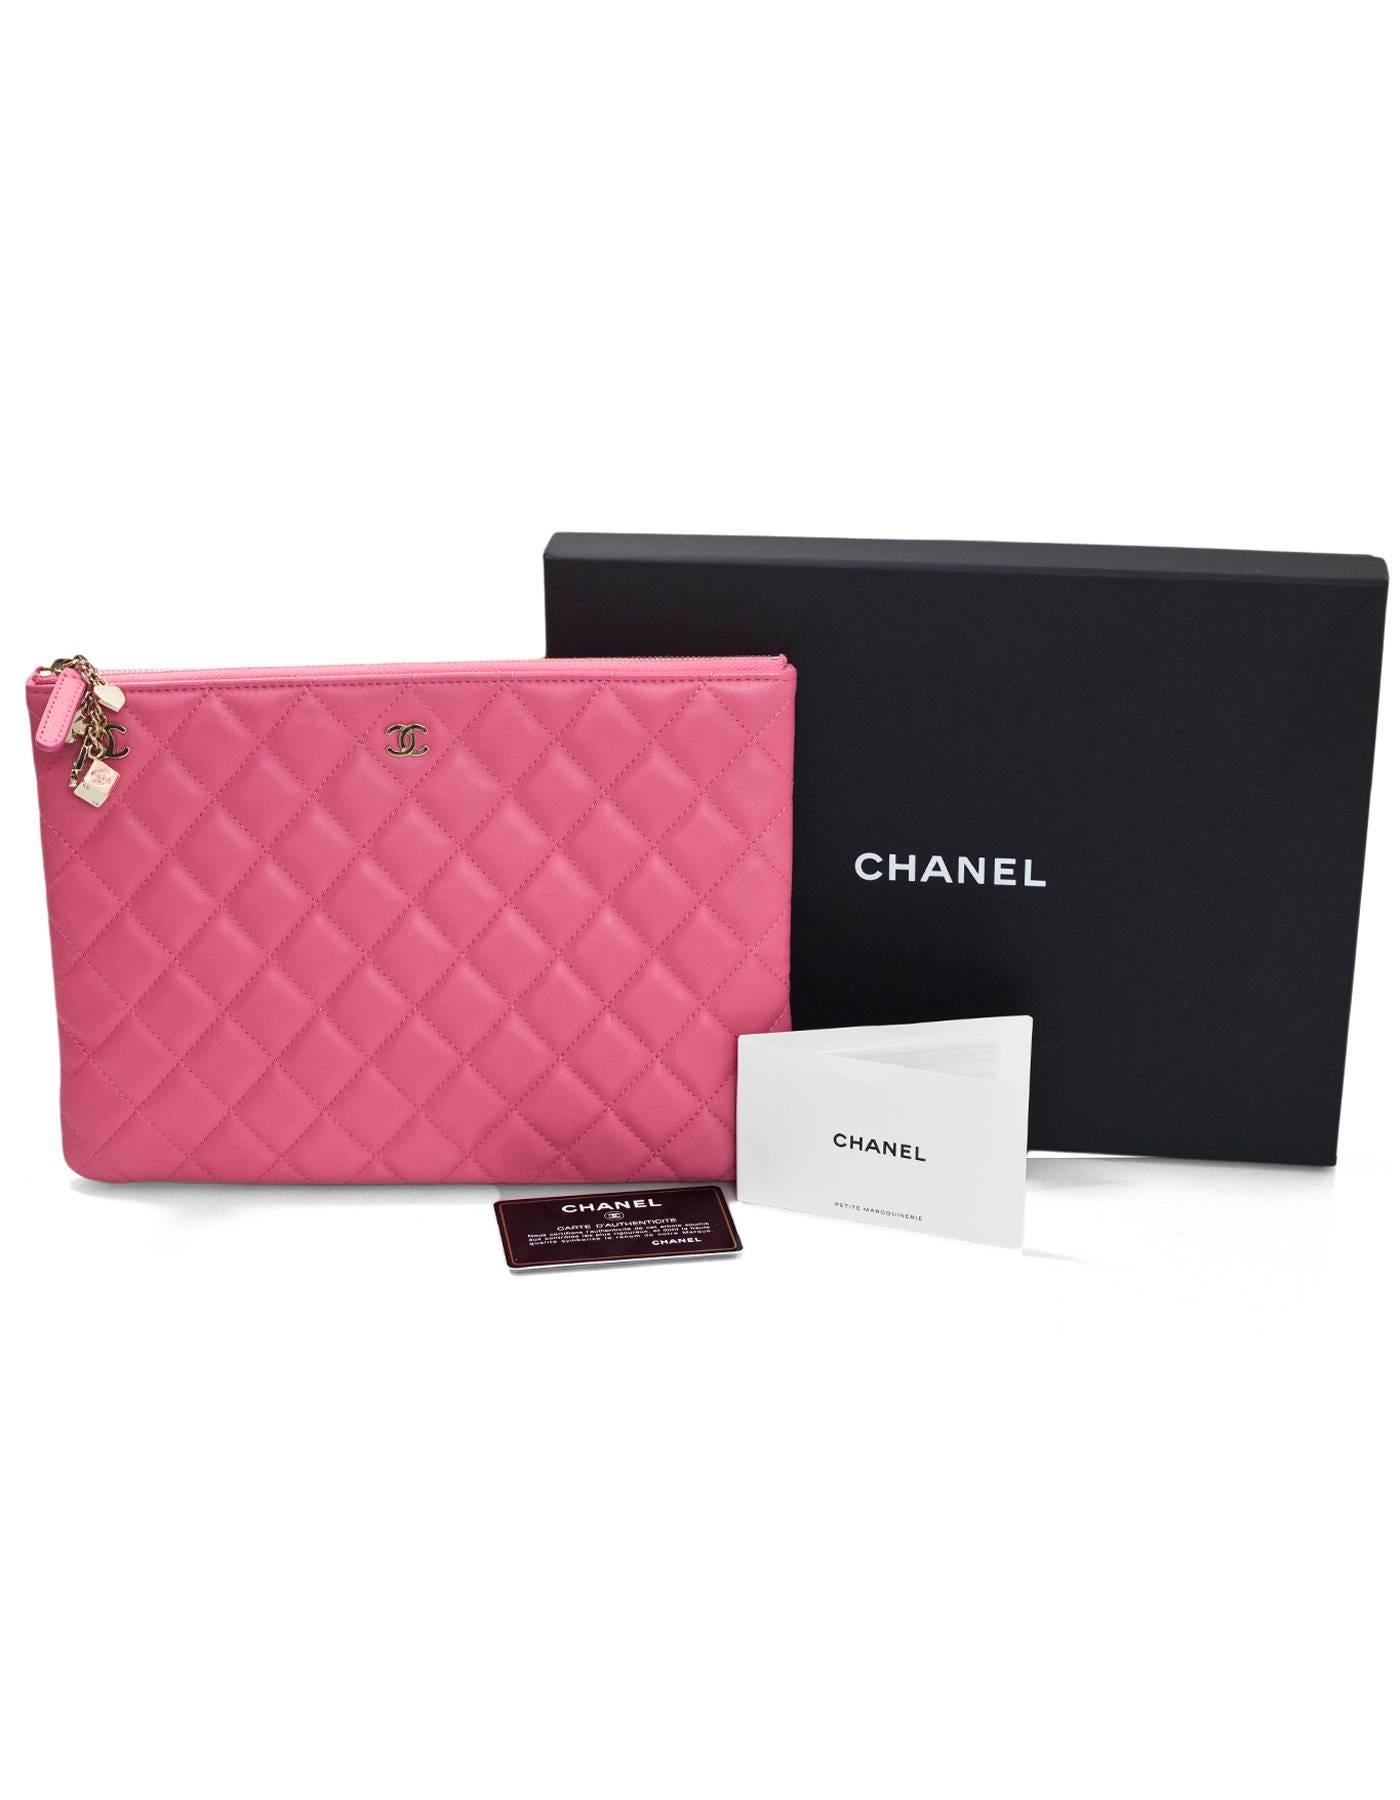 Chanel Pink Lambskin Medium Casino O-Case Clutch Bag with Box 2